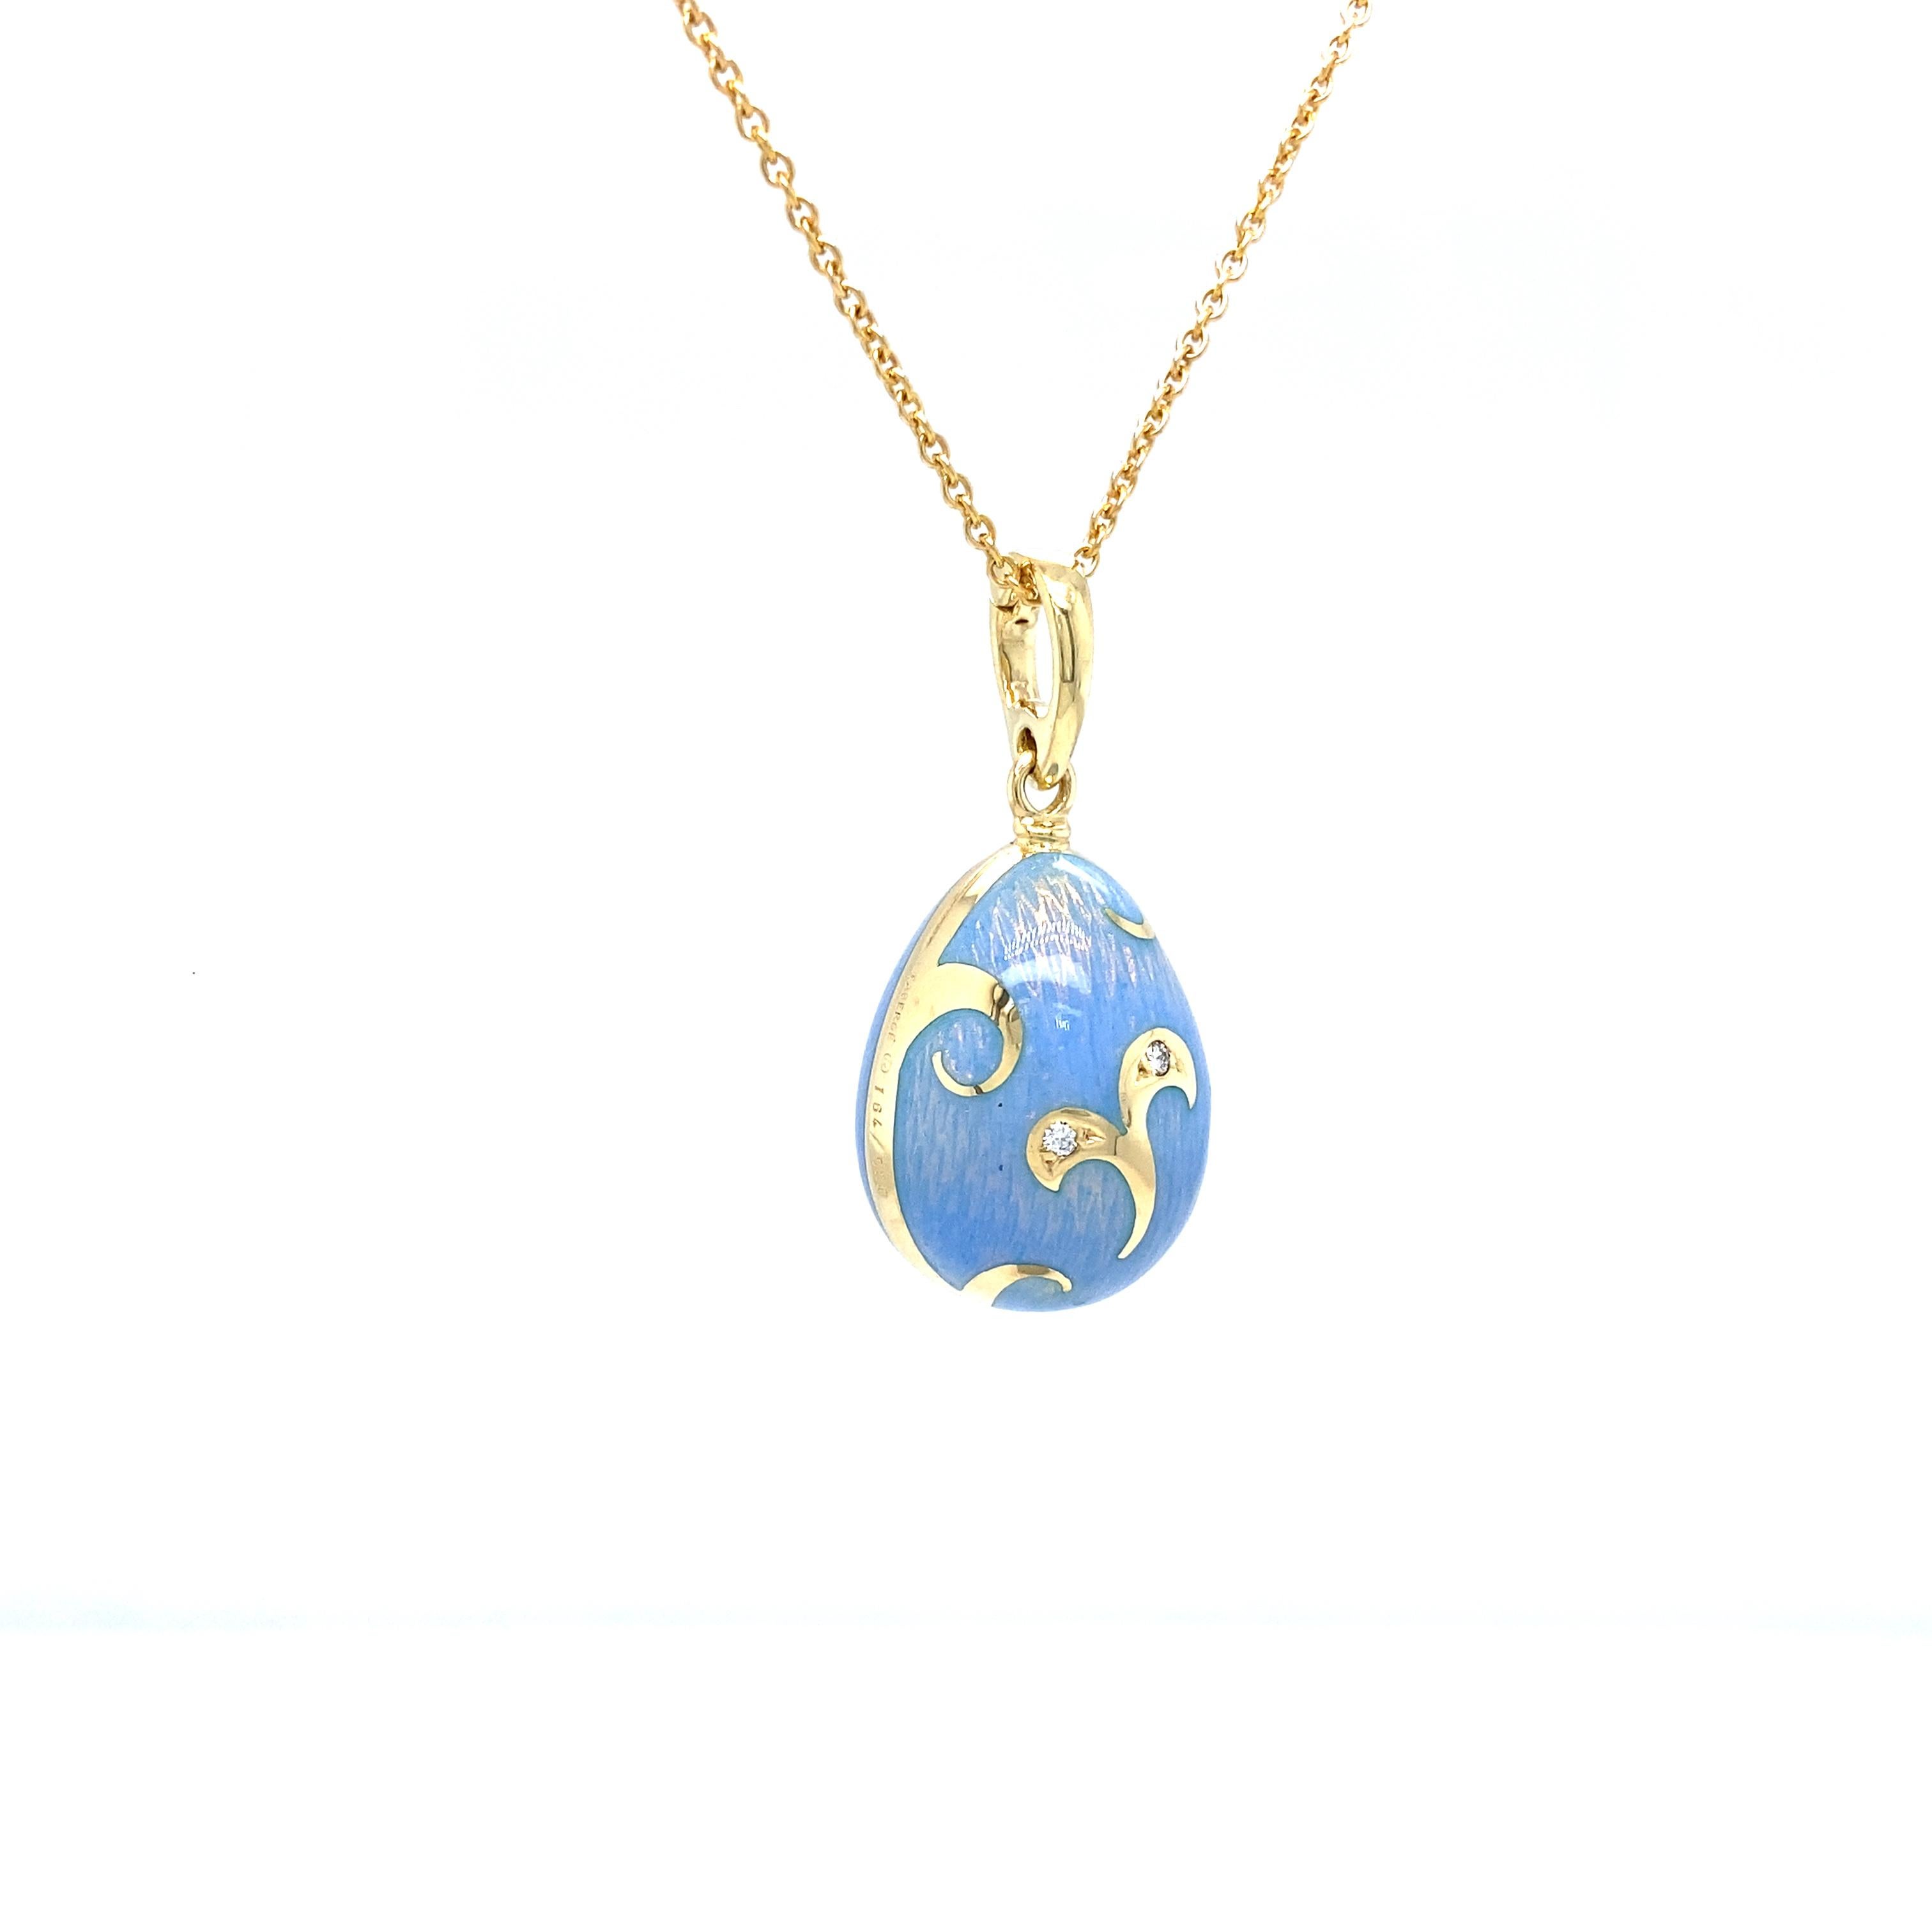 Fabergé egg pendant necklace, limited edition, 18k yellow gold, translucent opalescent blue, 2 brilliant cut diamonds 0.02 ct G VS, 45 cm

Reference: F1793/OB/00/00/102
Brand: Fabergé
Workmaster: Victor Mayer
Design inspiration: Rocaille /